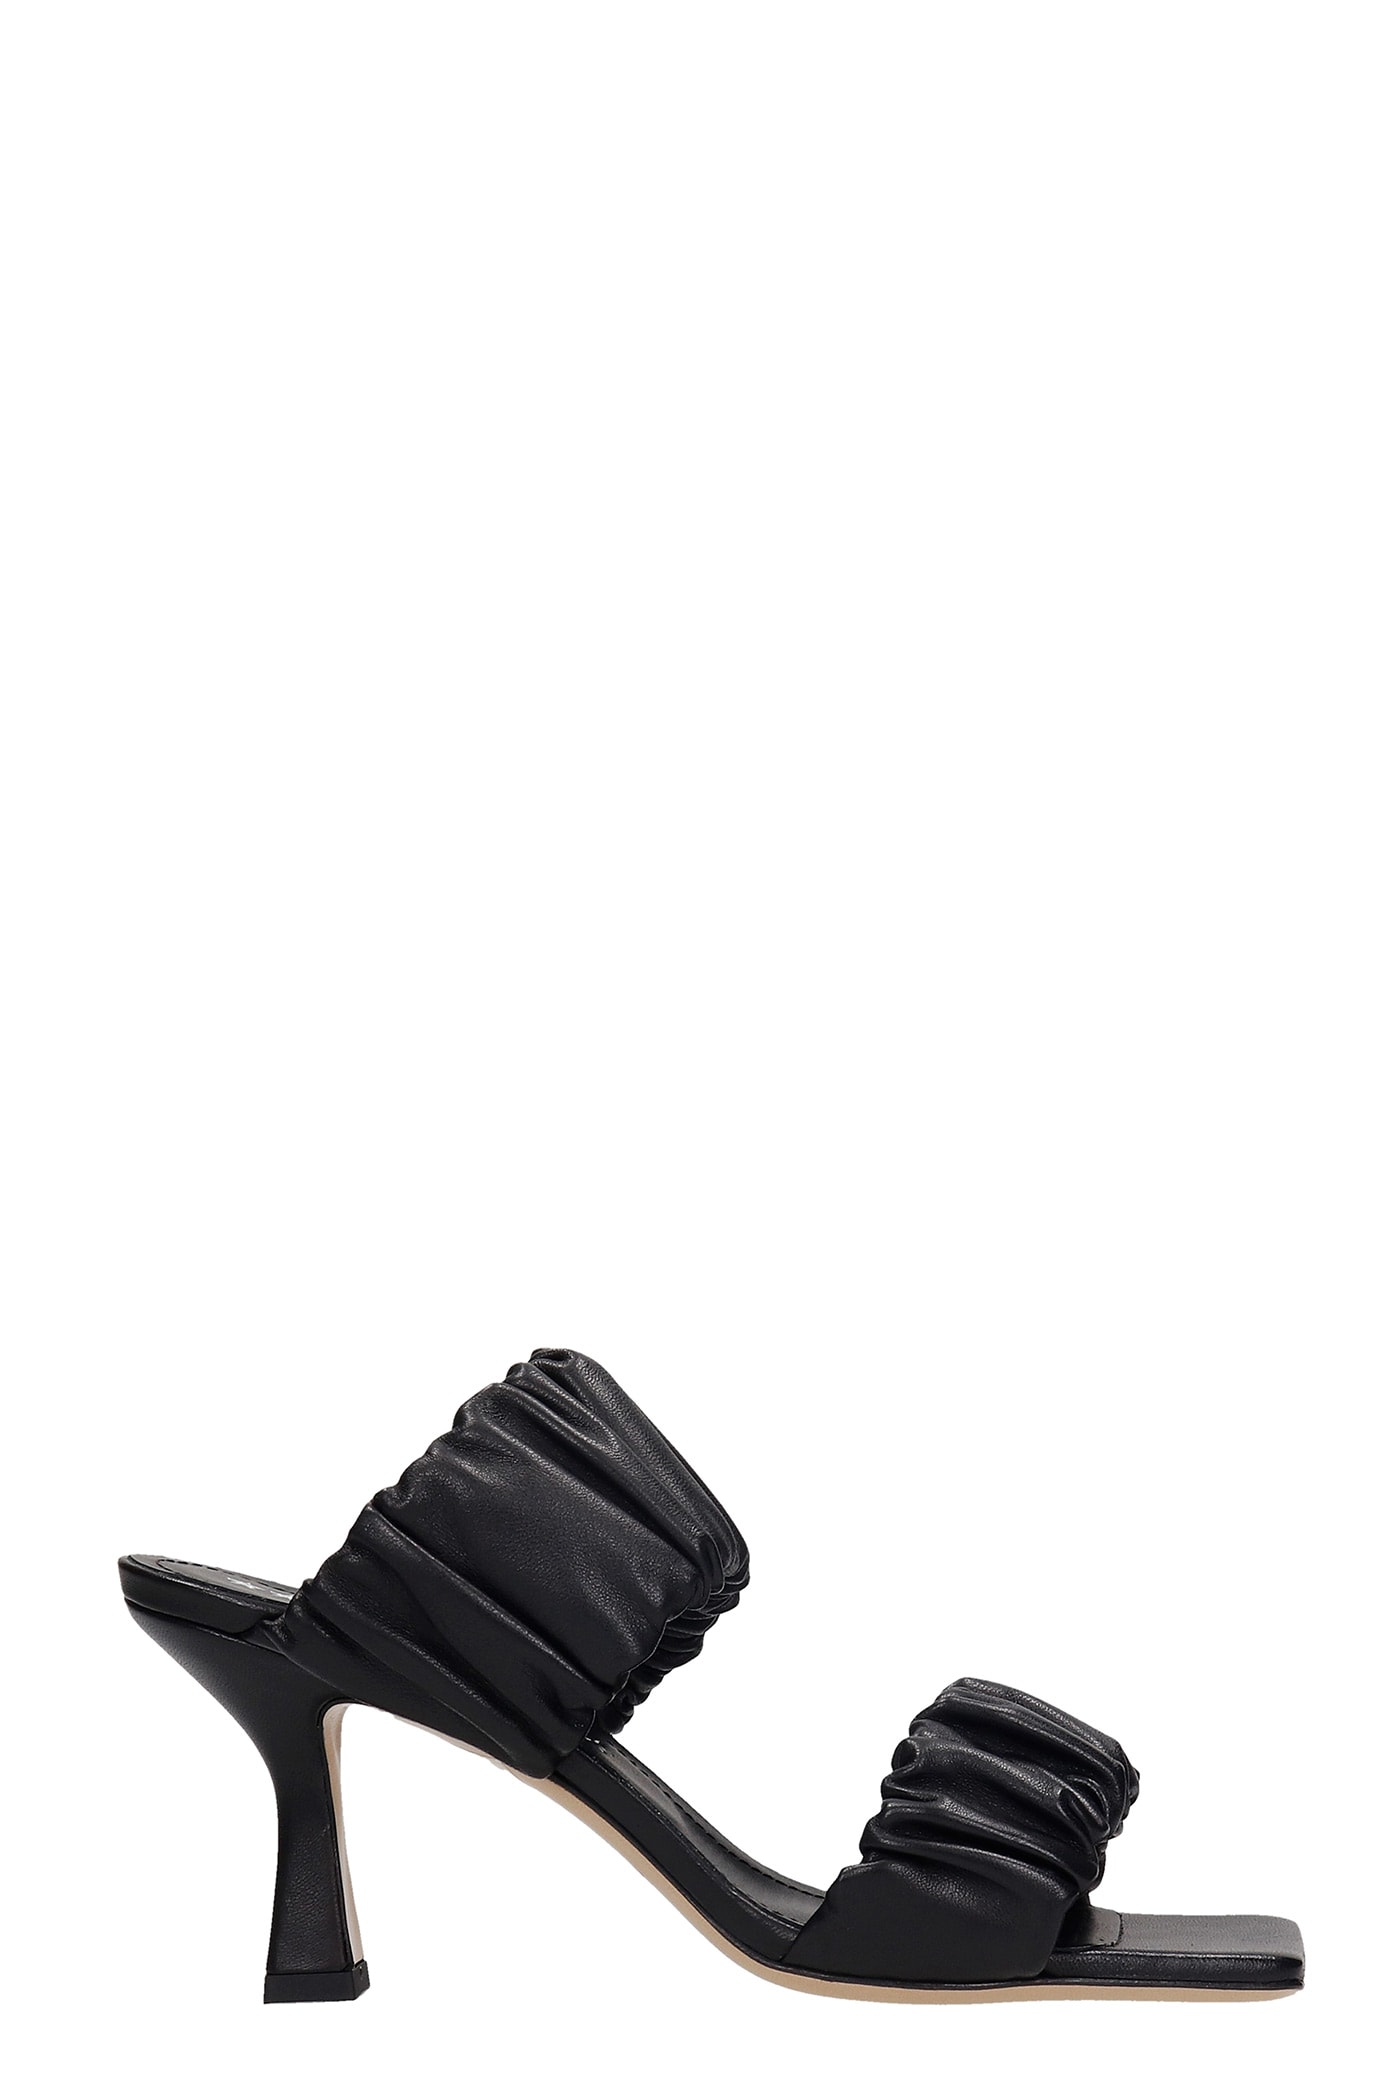 Marc Ellis Julia Sandals In Black Leather